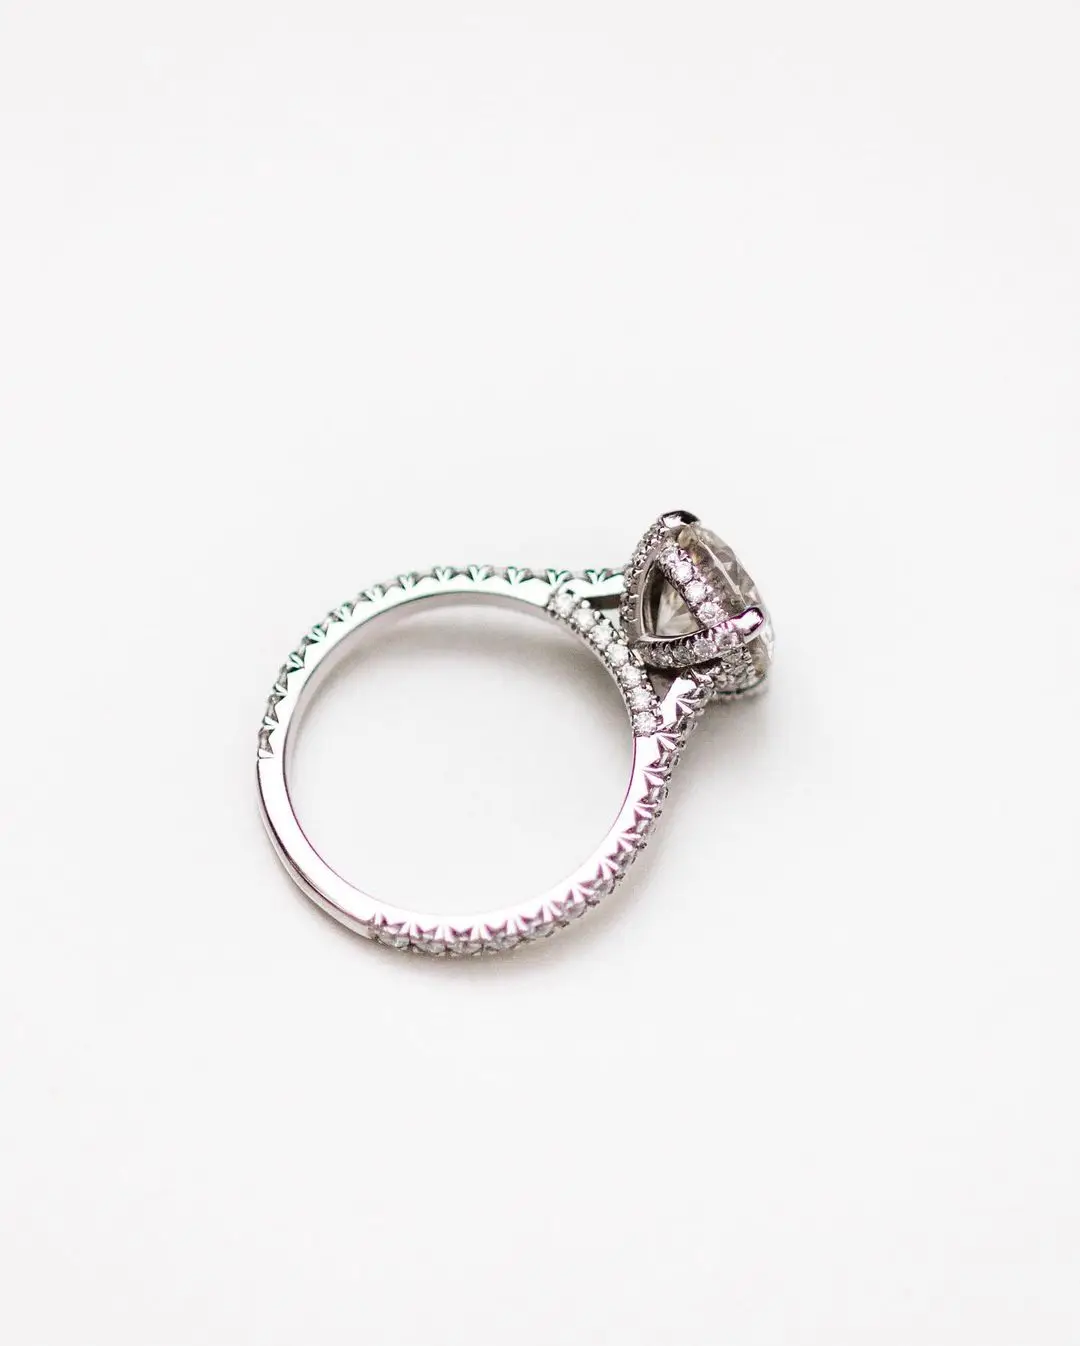 Jovovasmile Moissanite 18K Rose Gouden Ring 2Carat 8Mm Ronde Uitstekende Cut Moissanite Ringen Eternity Wedding Band Voor vrouwen Gift